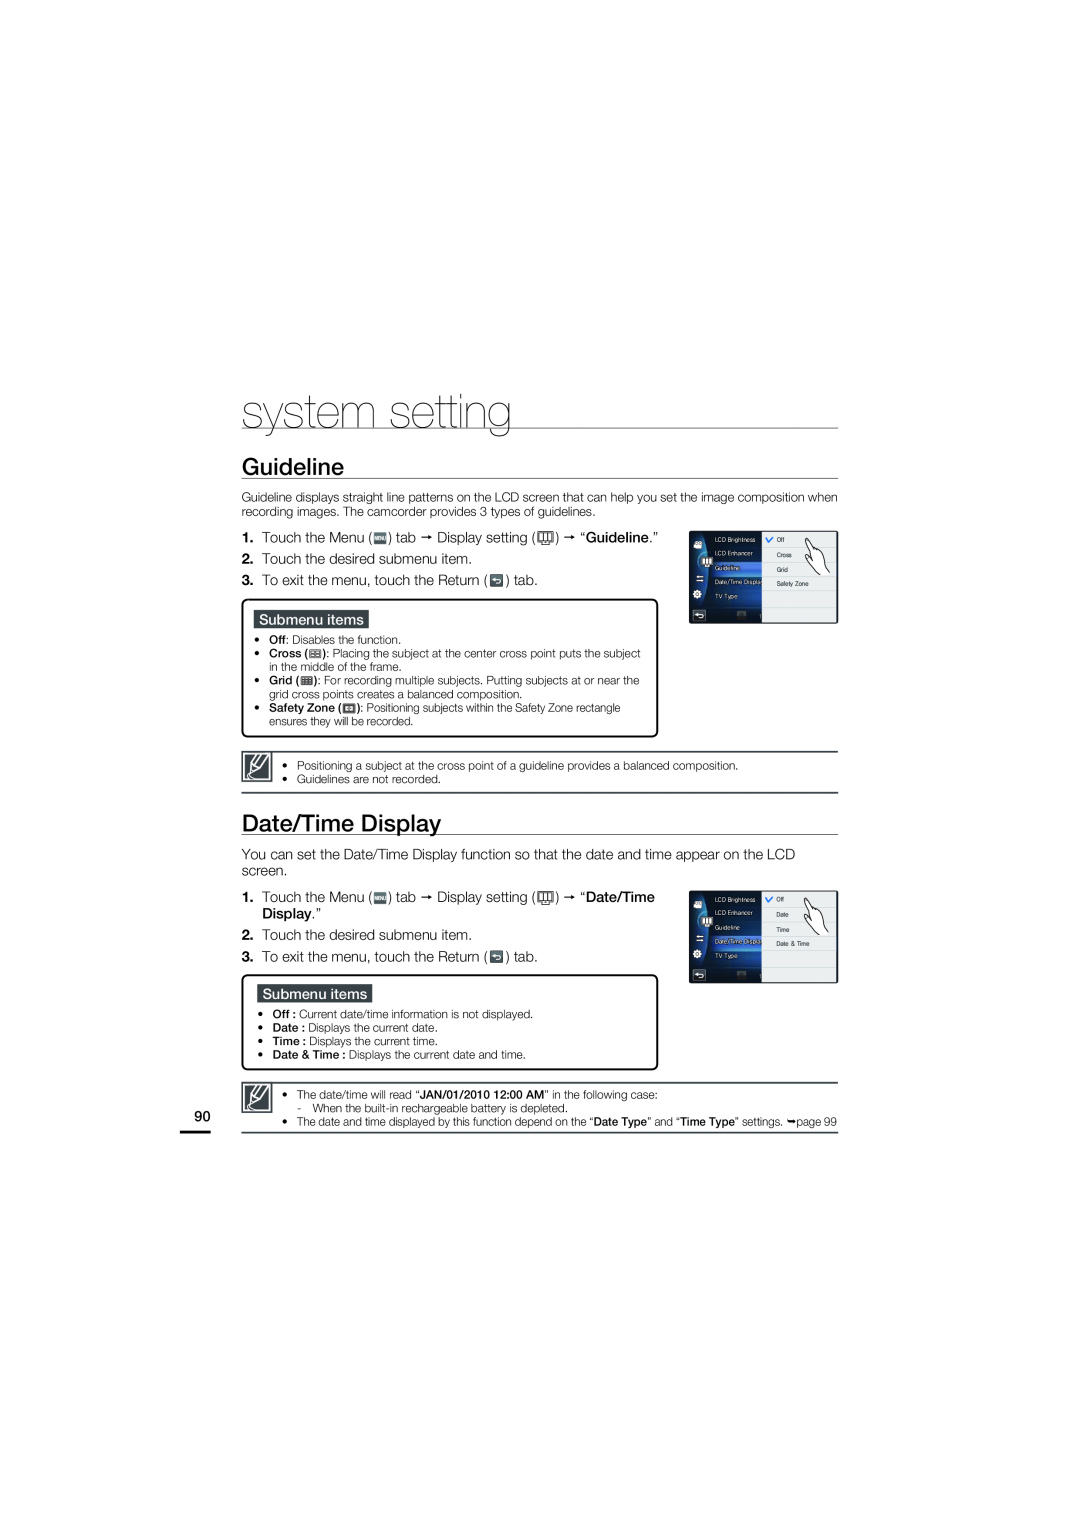 Samsung HMX-S15BN/XAA, HMX-S10BN/XAA manual Guideline, Date/Time Display, system setting, Submenu items 